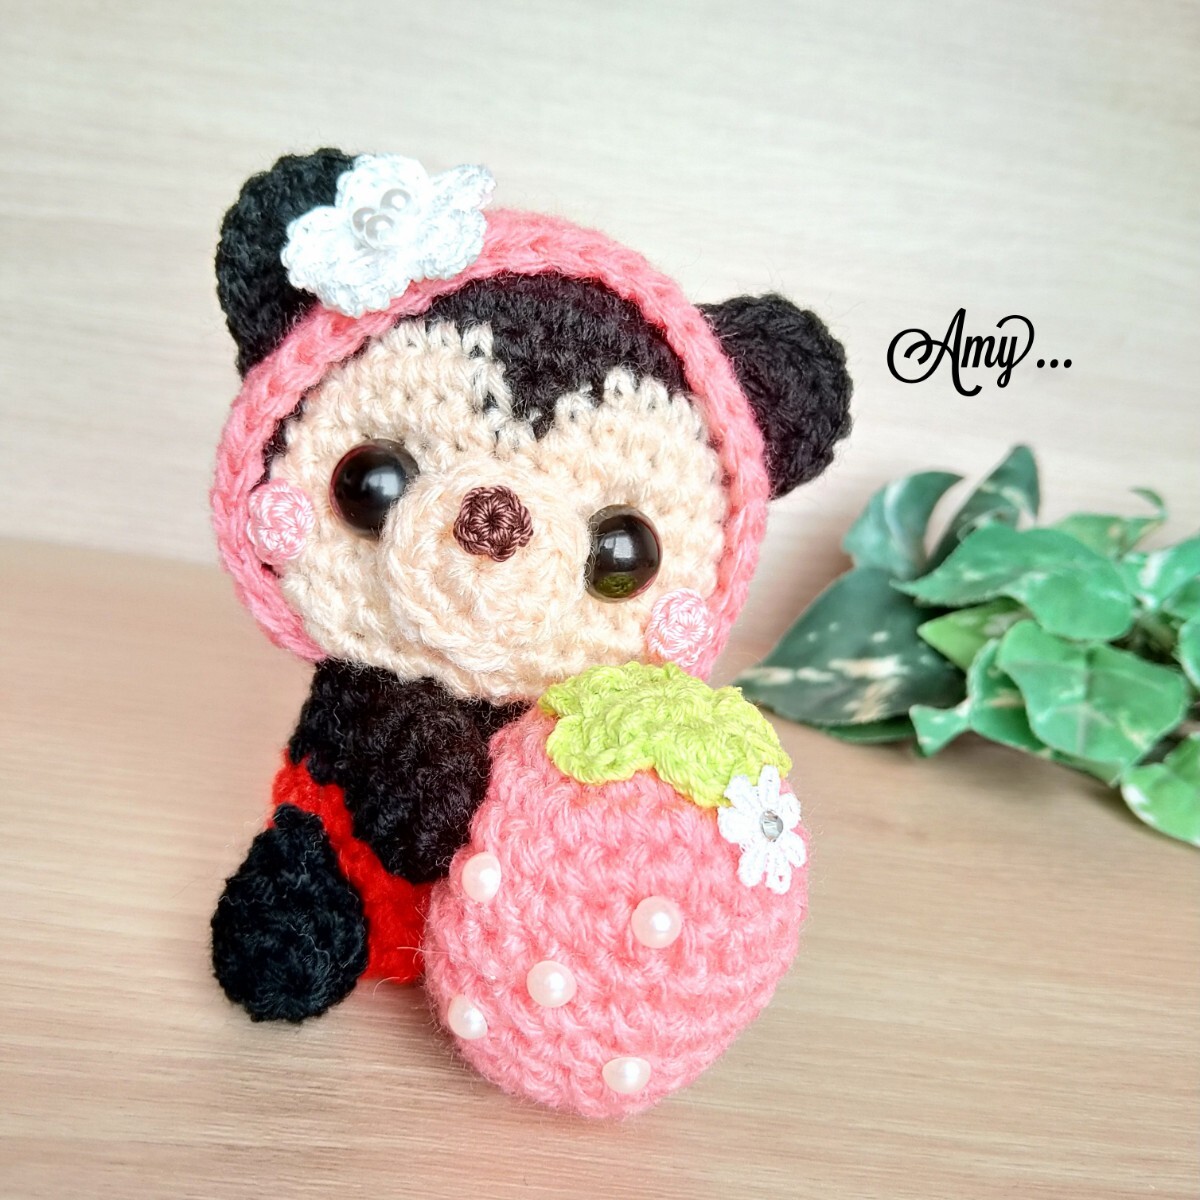 ■Amy... Amigurumi Plump Pearl Strawberry Hug★Boy Free Shipping Handmade♪, toy, game, stuffed toy, Amigurumi